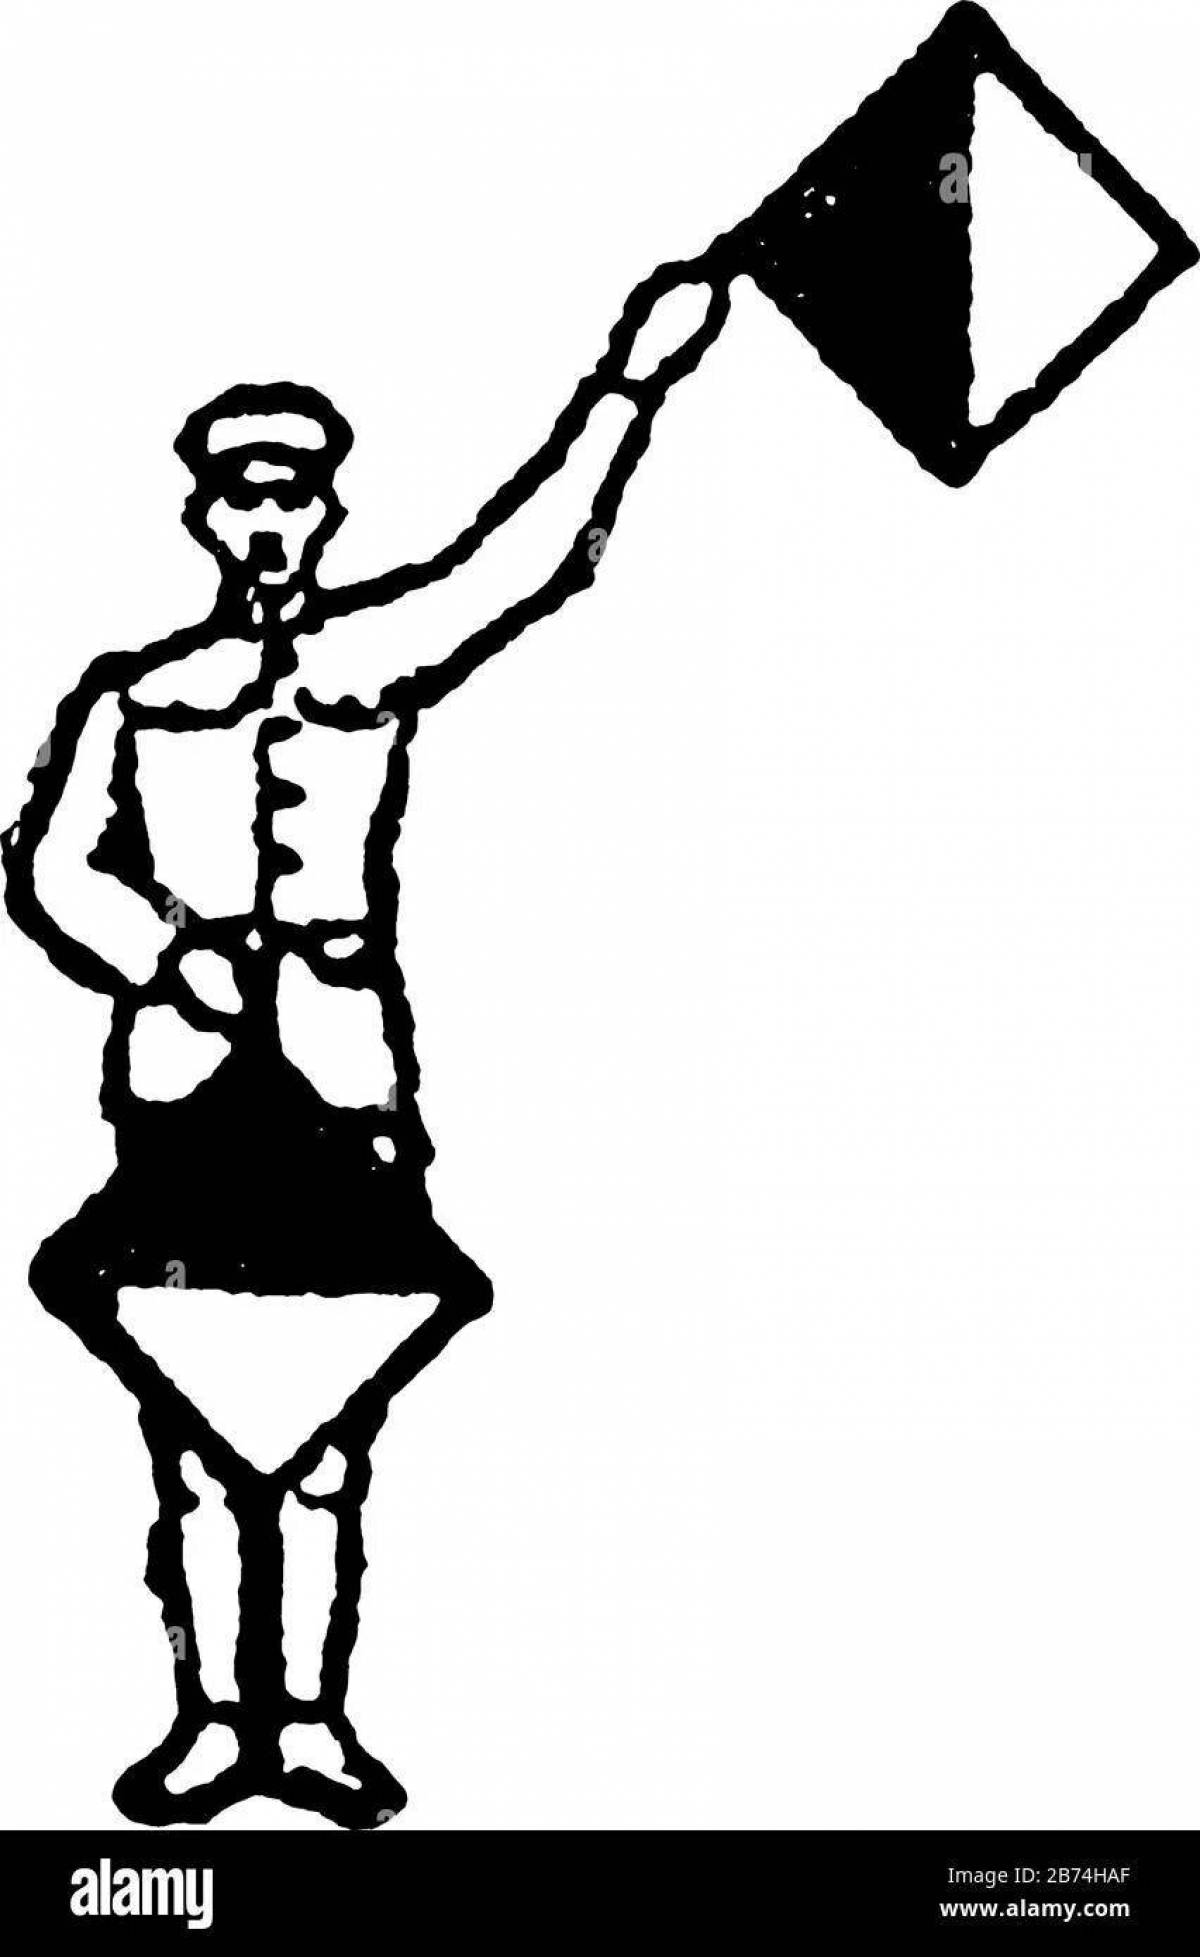 Fun coloring book sailor with signal flags